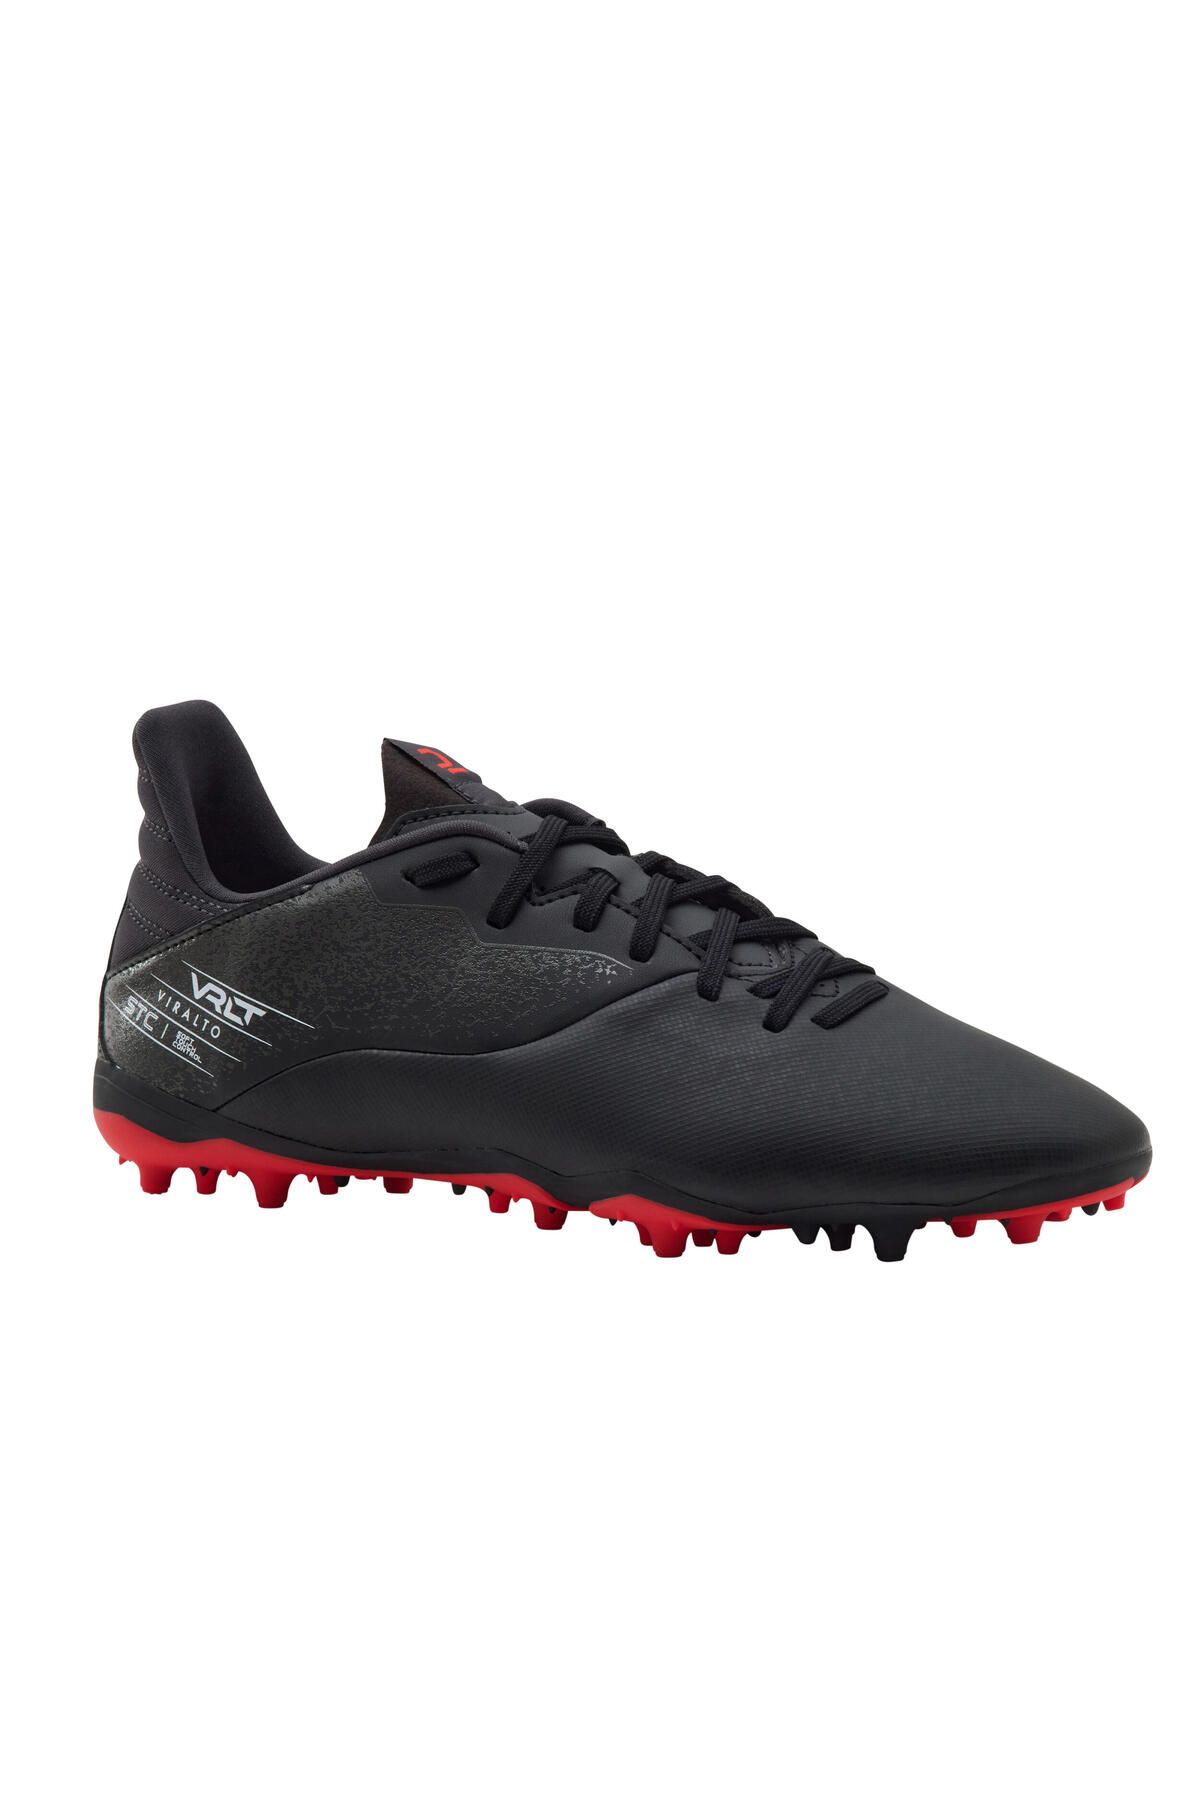 Decathlon Erkek Krampon / Futbol Ayakkabısı - Siyah / Kırmızı - Vıralto I Mg/ag